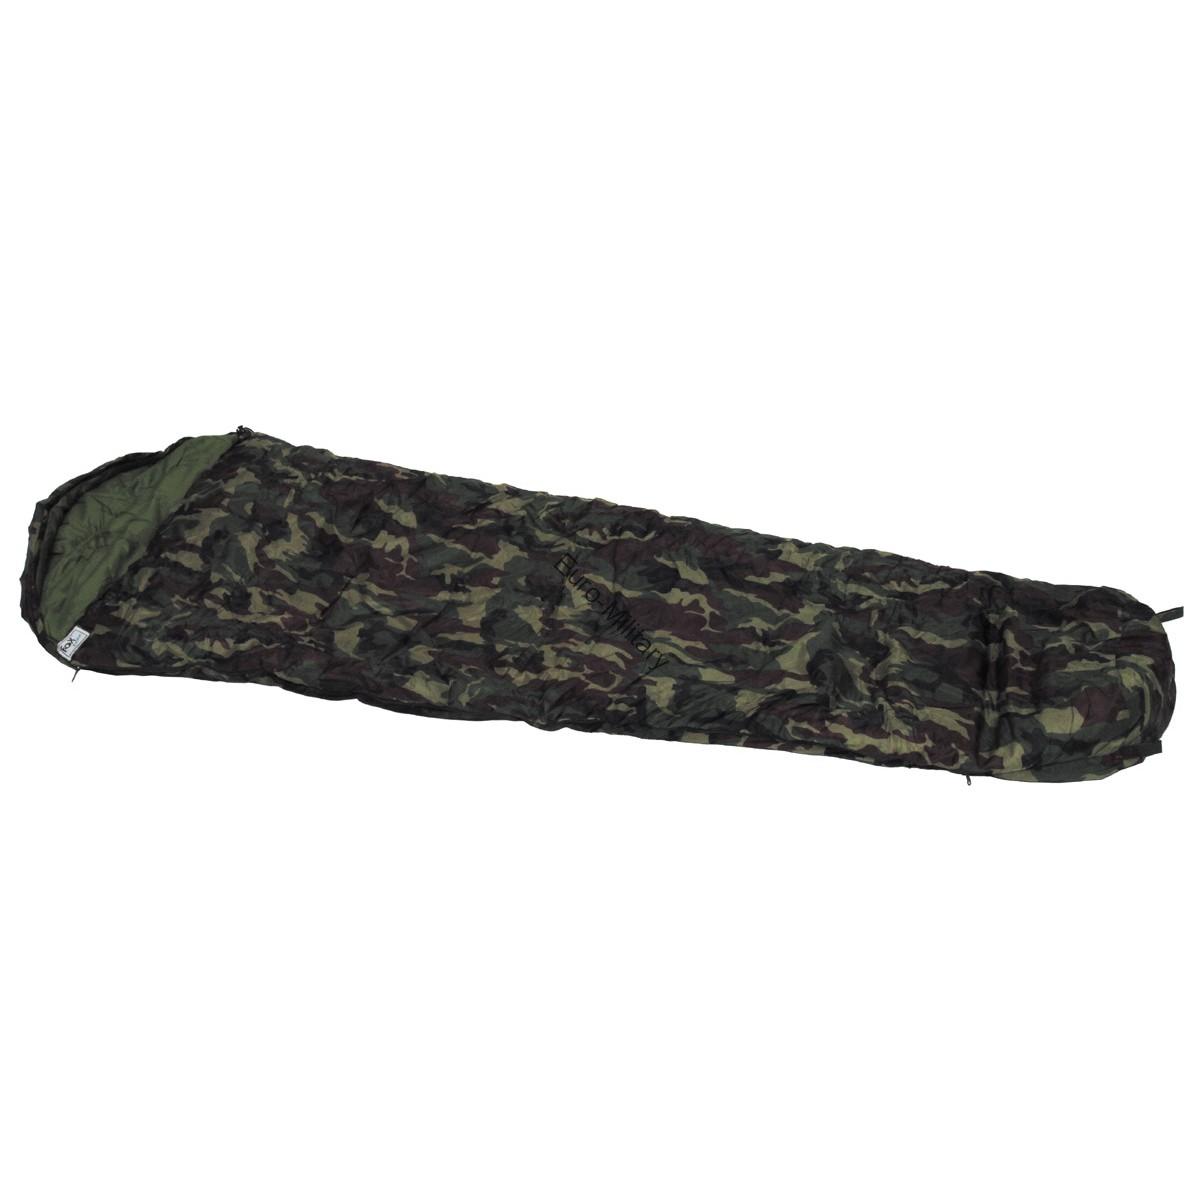 Military Sleeping Bag - Lining 450g qm - Woodland